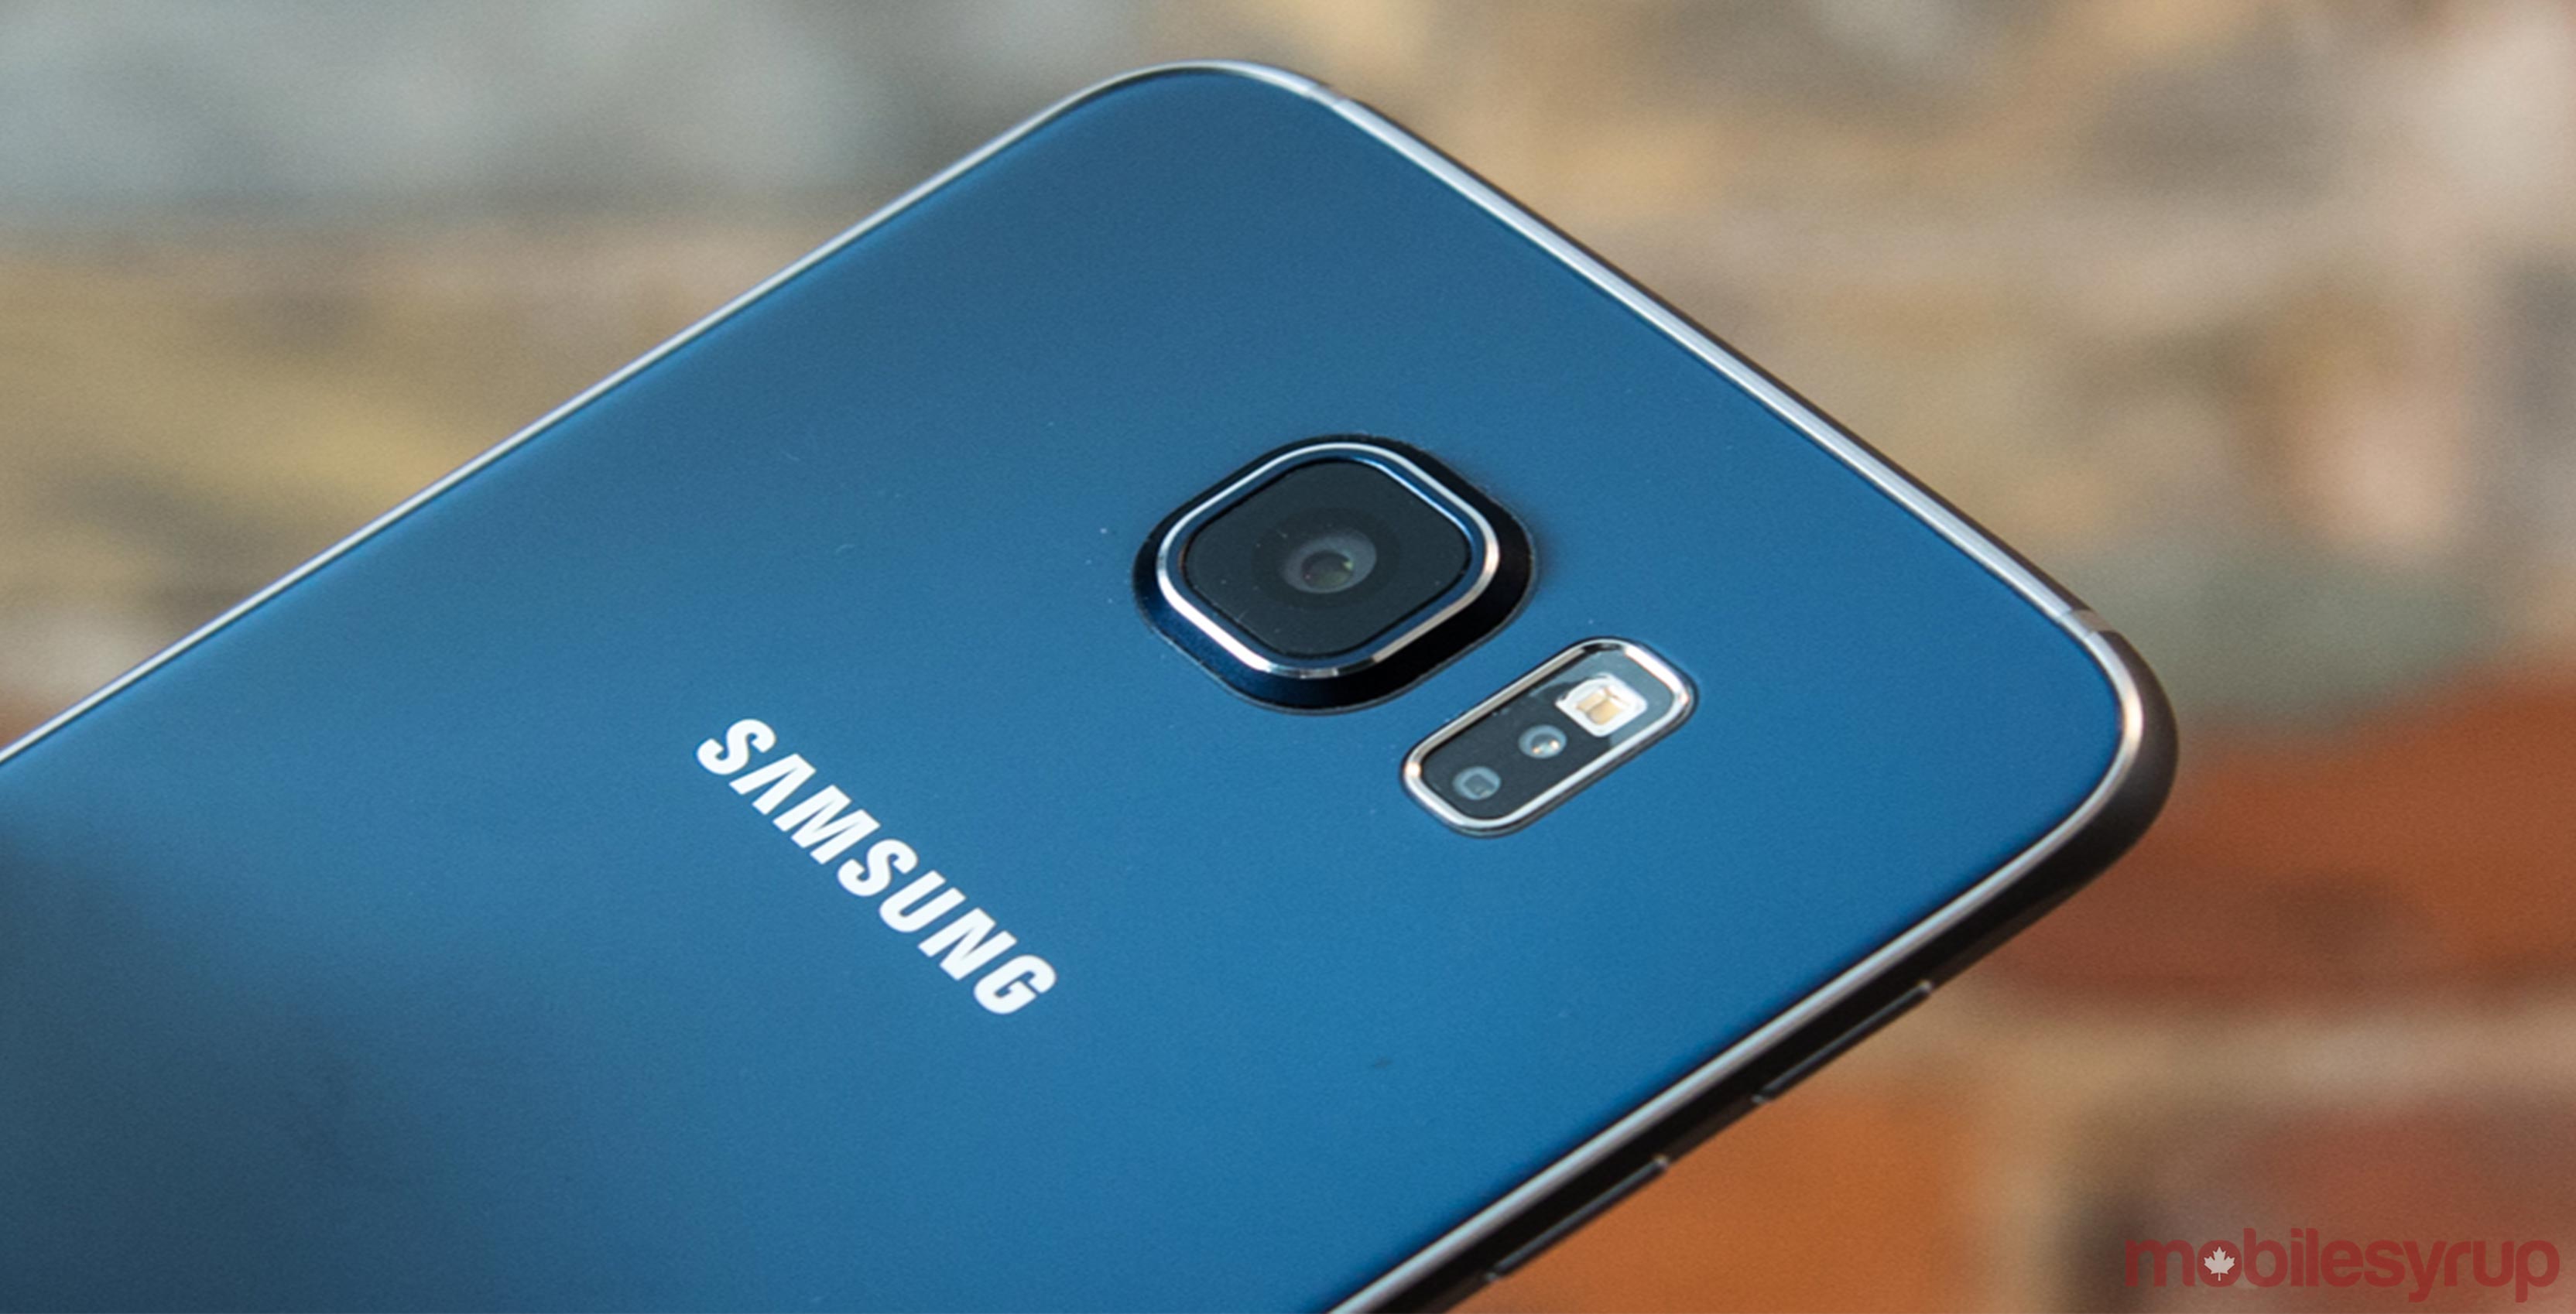 Back of Samsung Galaxy S6 smartphone